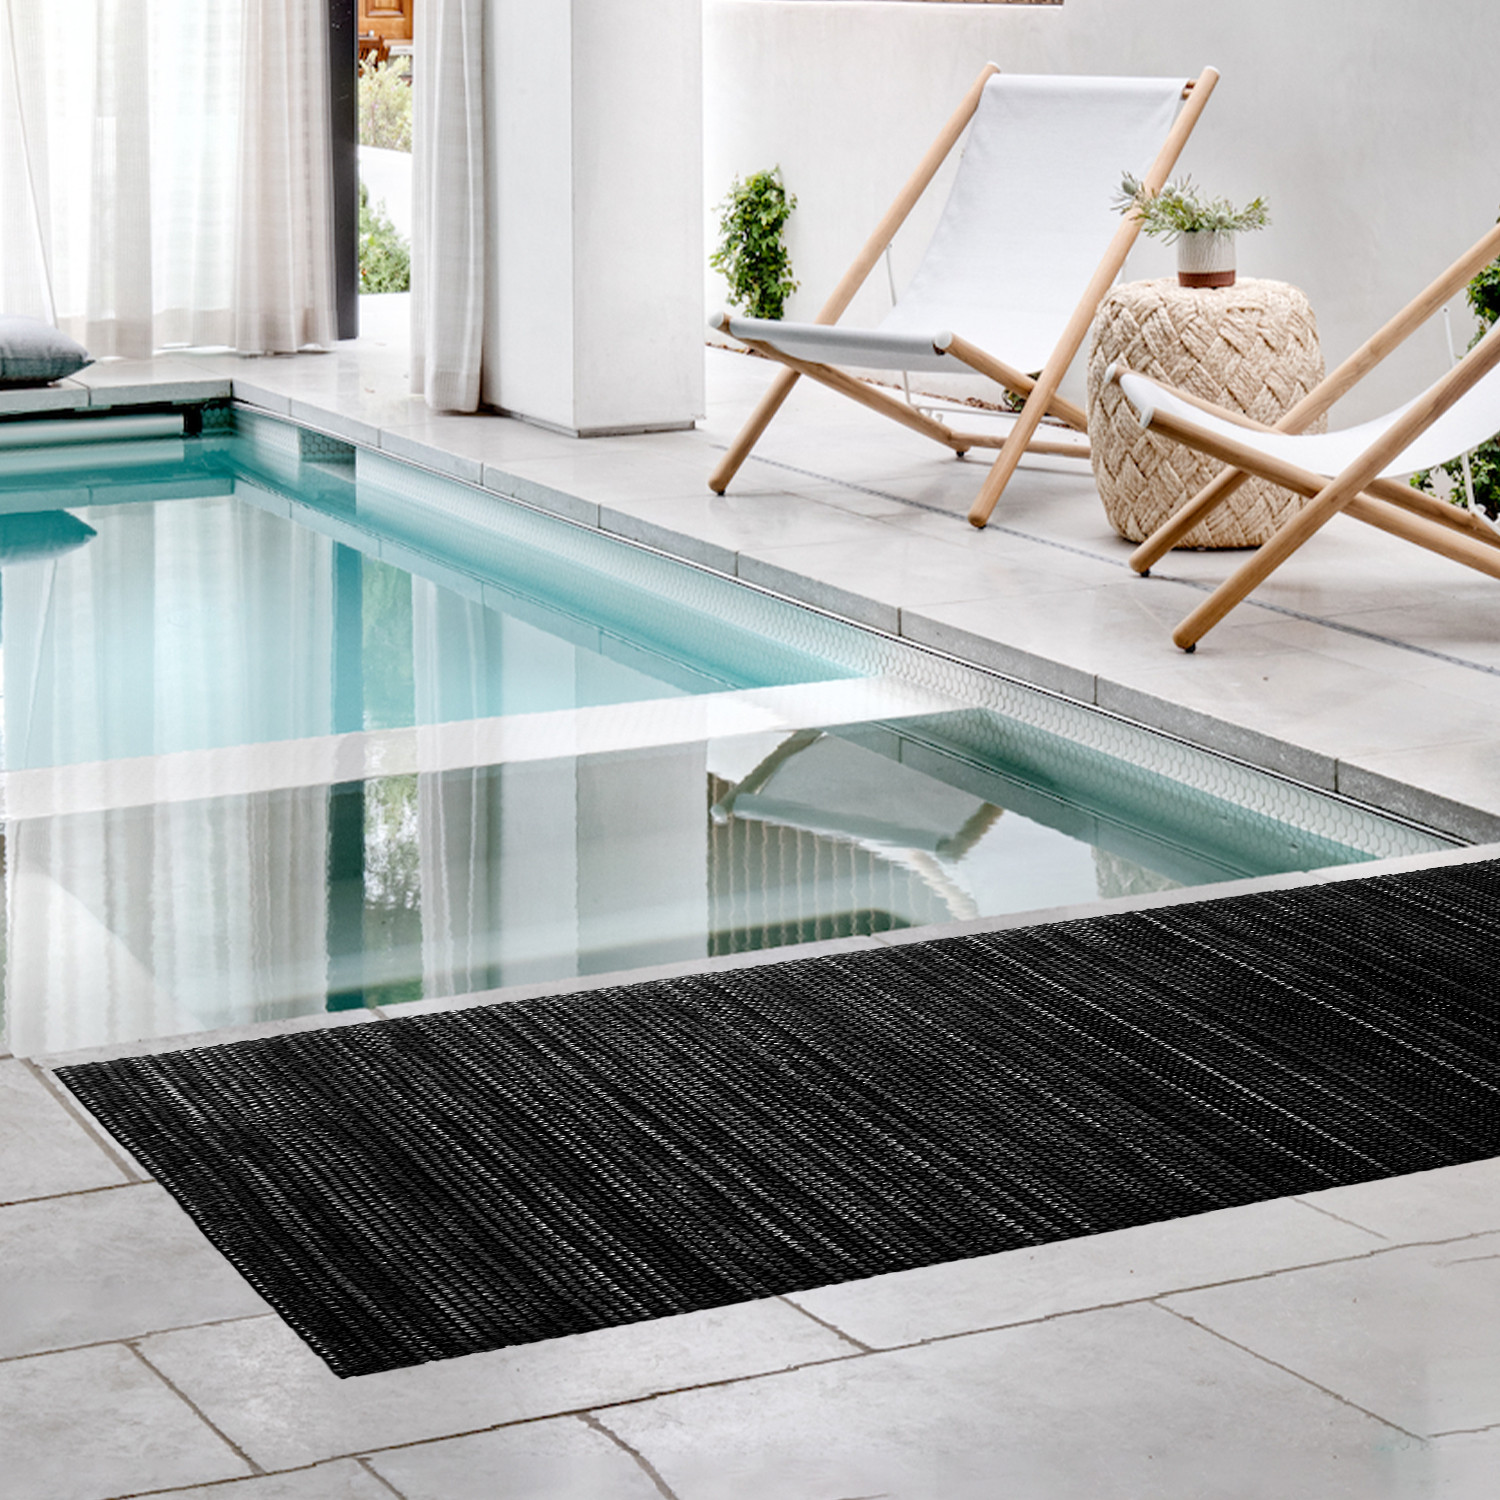 Kuber Industries Rubber Waterproof Anti-Skid Swimming Pool Mat|Shower Mat|Rainmat For Entrance Area,Bathroom,2 x 18 Feet (Black)